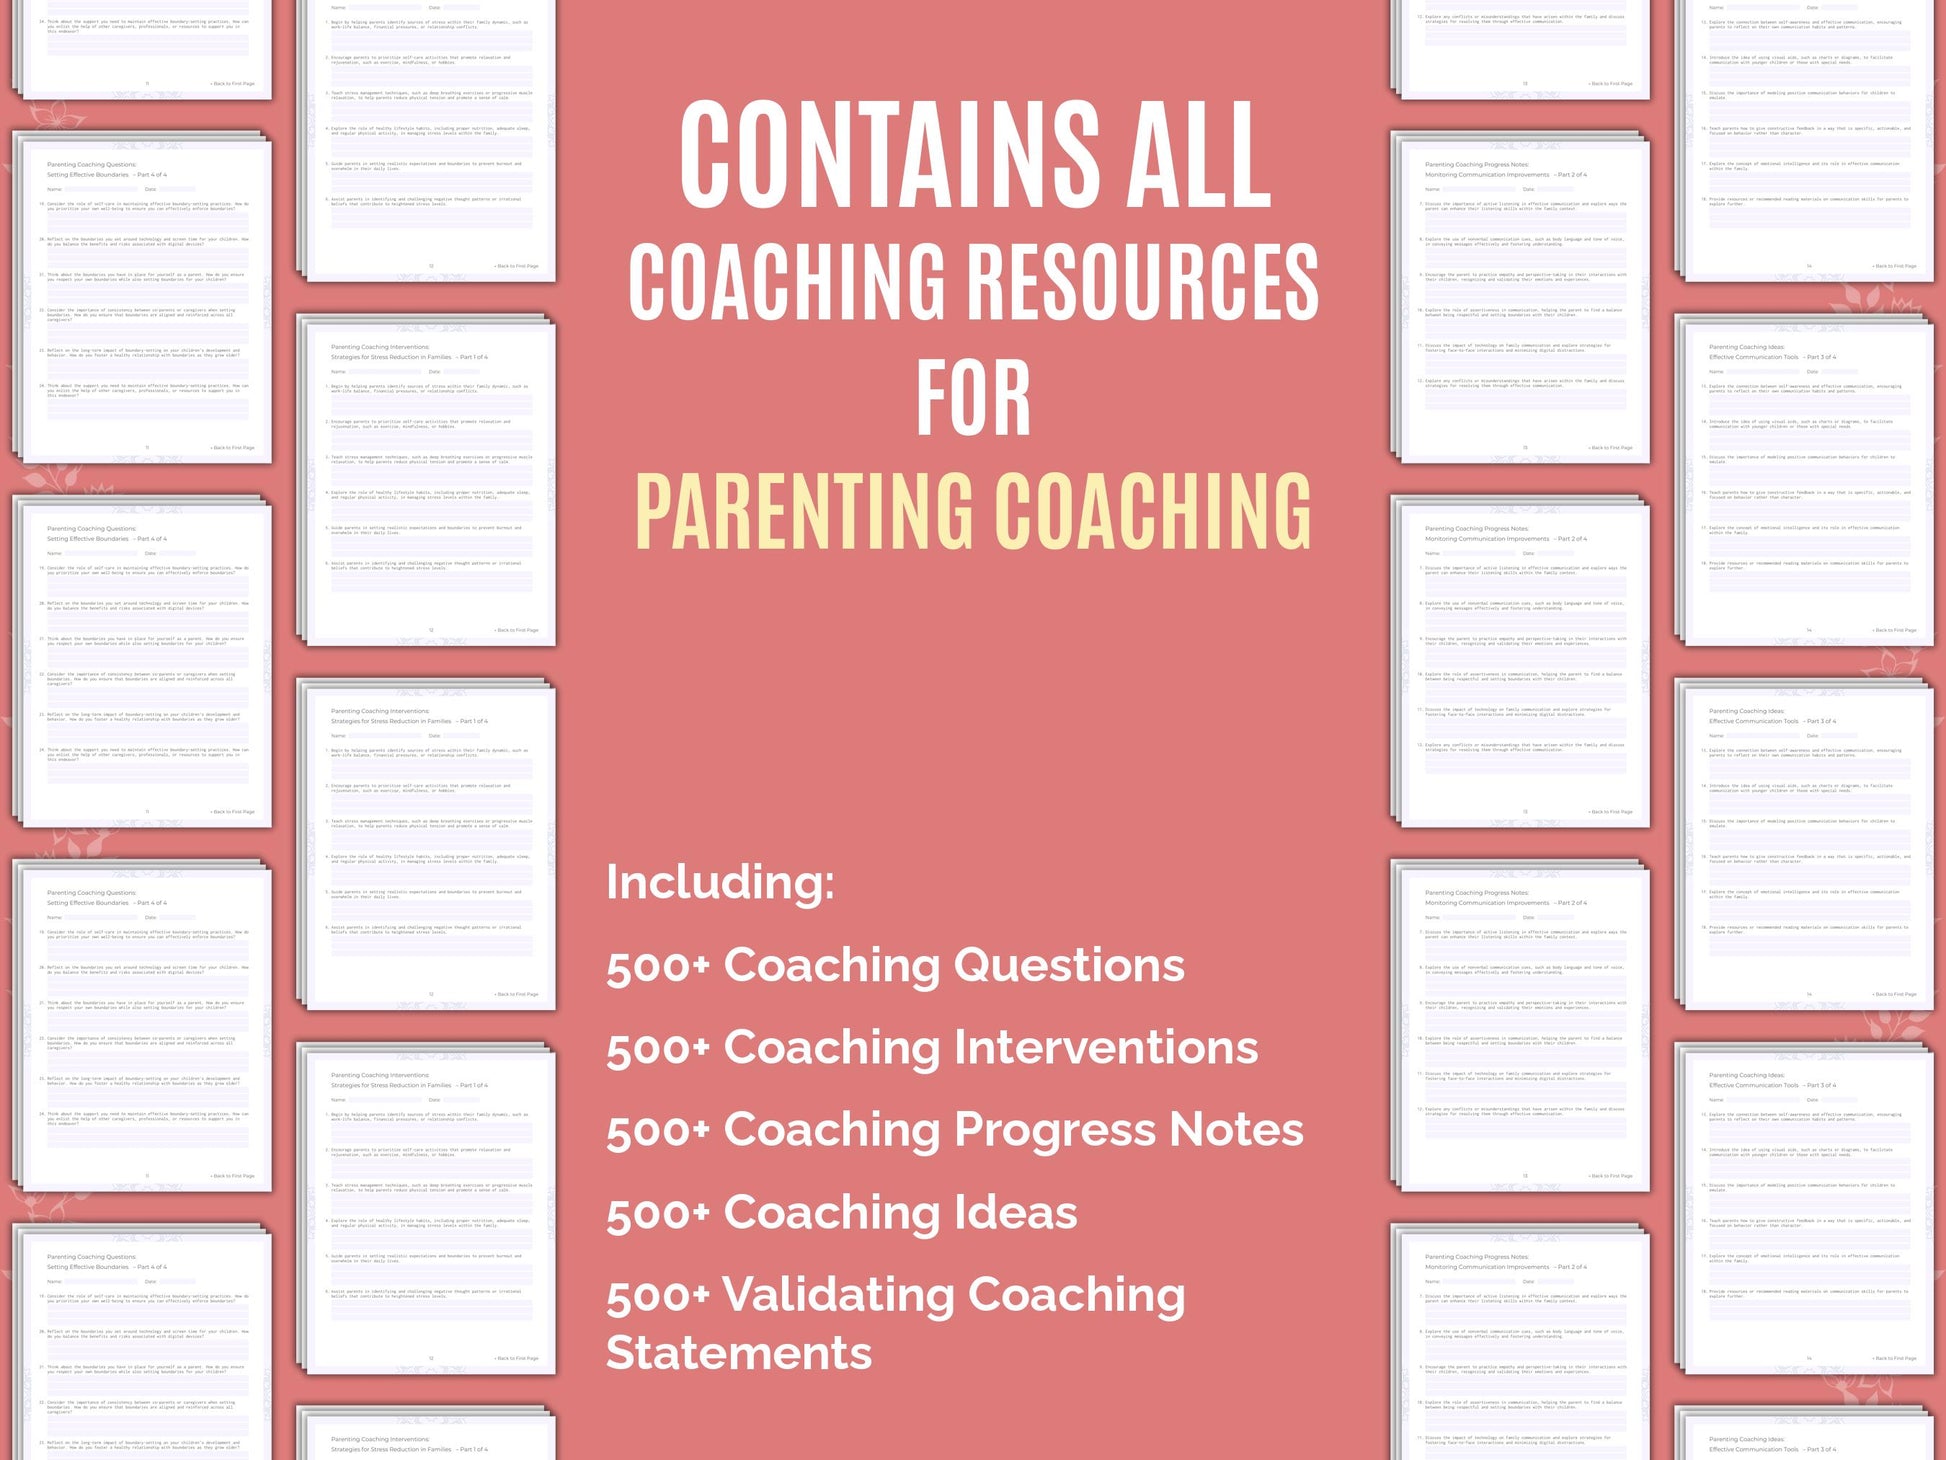 Coaching Progress Notes Workbook